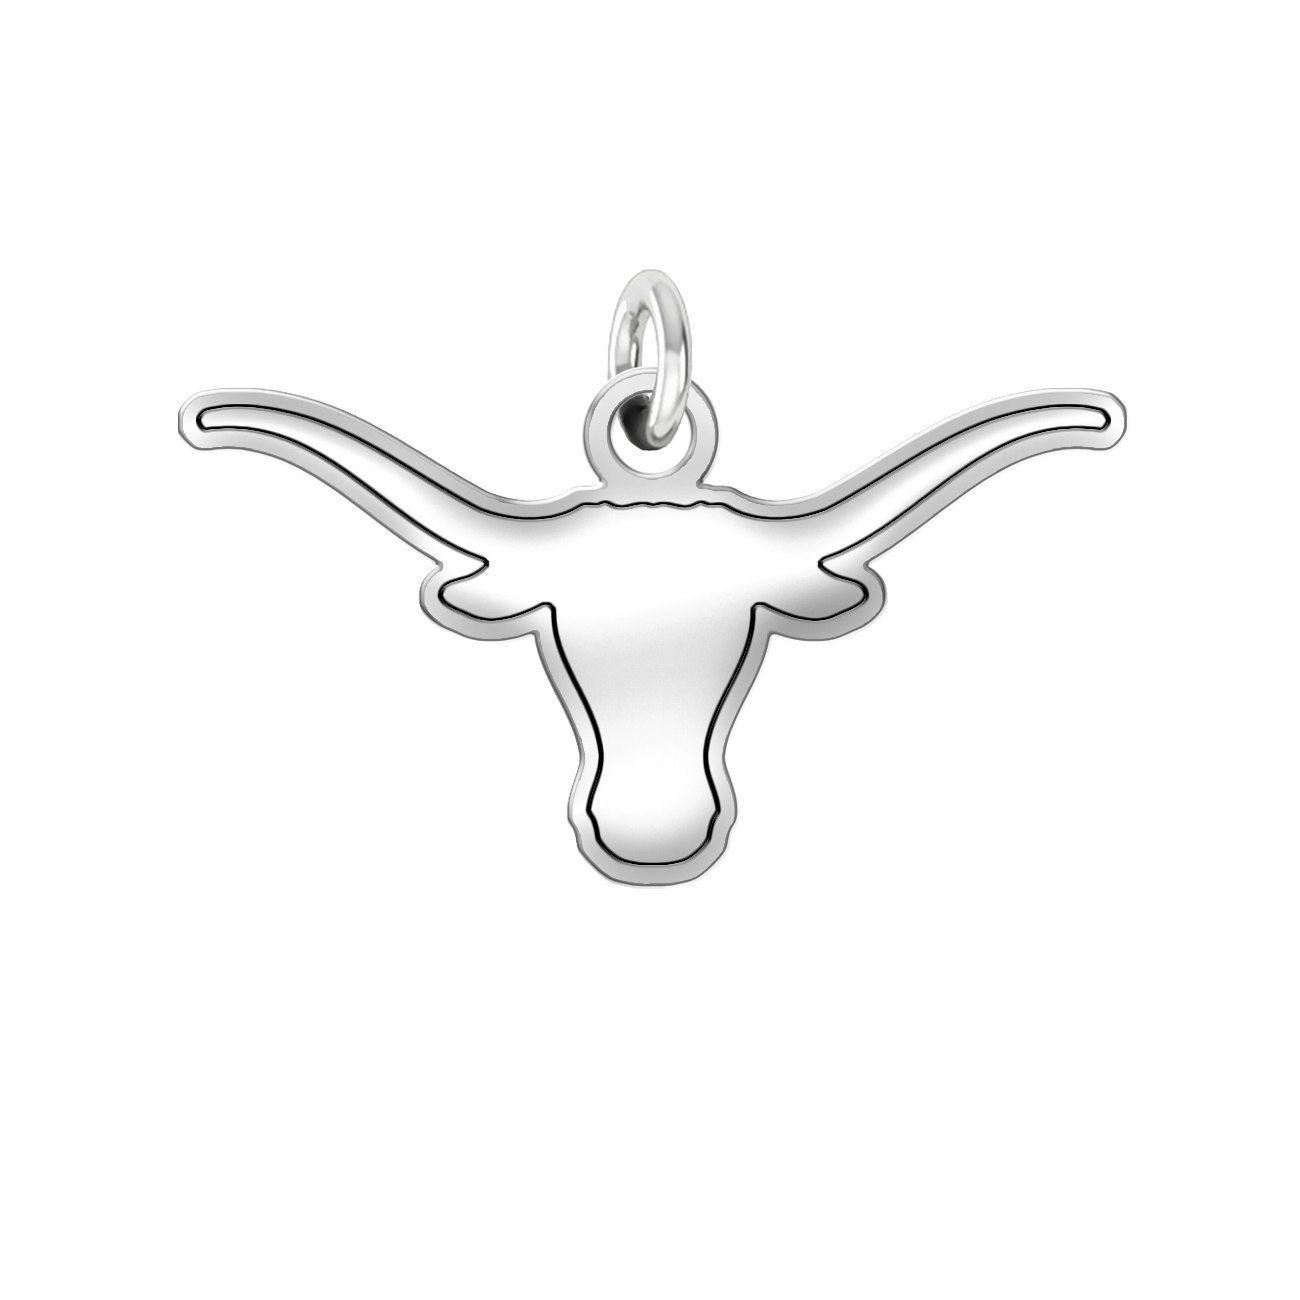 Black and White Longhorn Logo - Amazon.com: College Jewelry Texas Longhorns Charm - 3/4